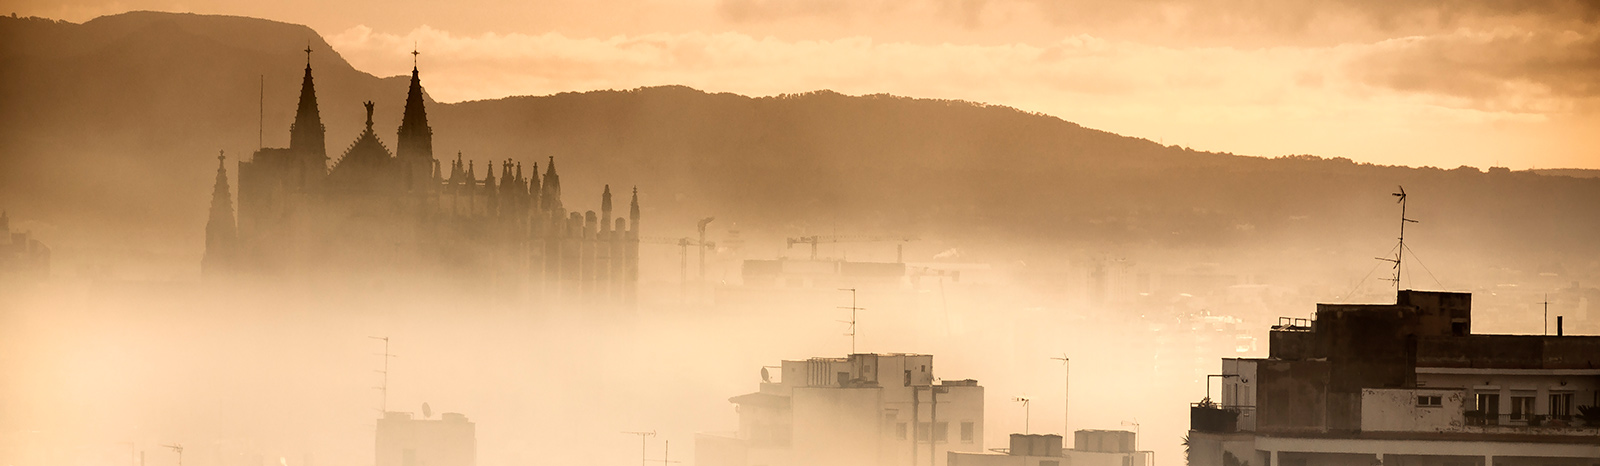 Catedral de Palma de Mallorca entre la niebla